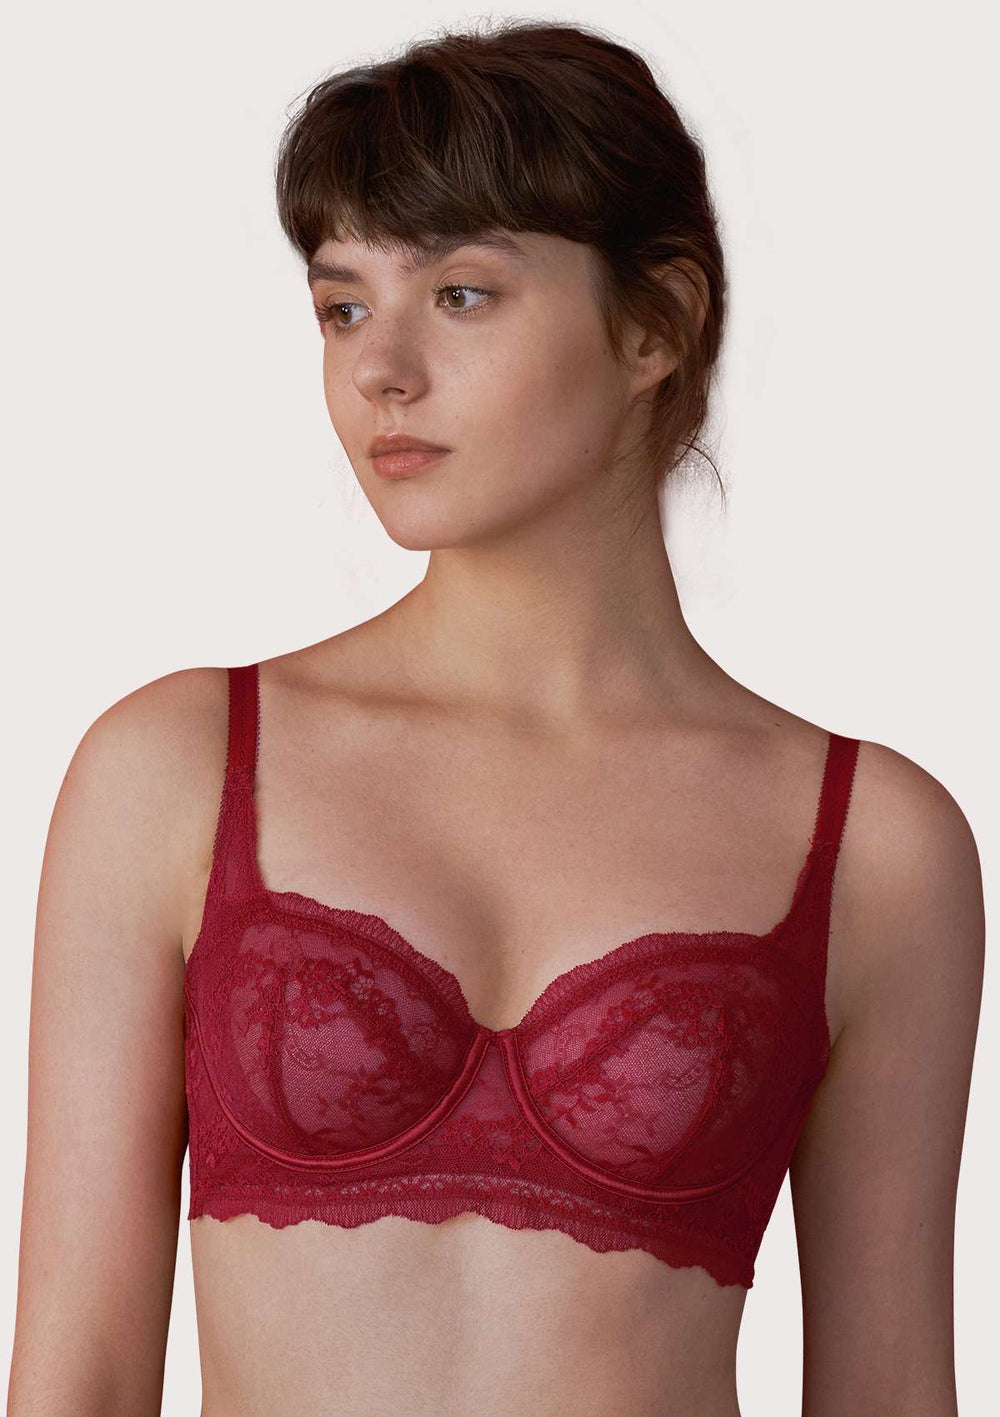 Buy Designer Lace Red Padded Bra for T - Shirt,Office Wear, Wedding Bra for  Women at